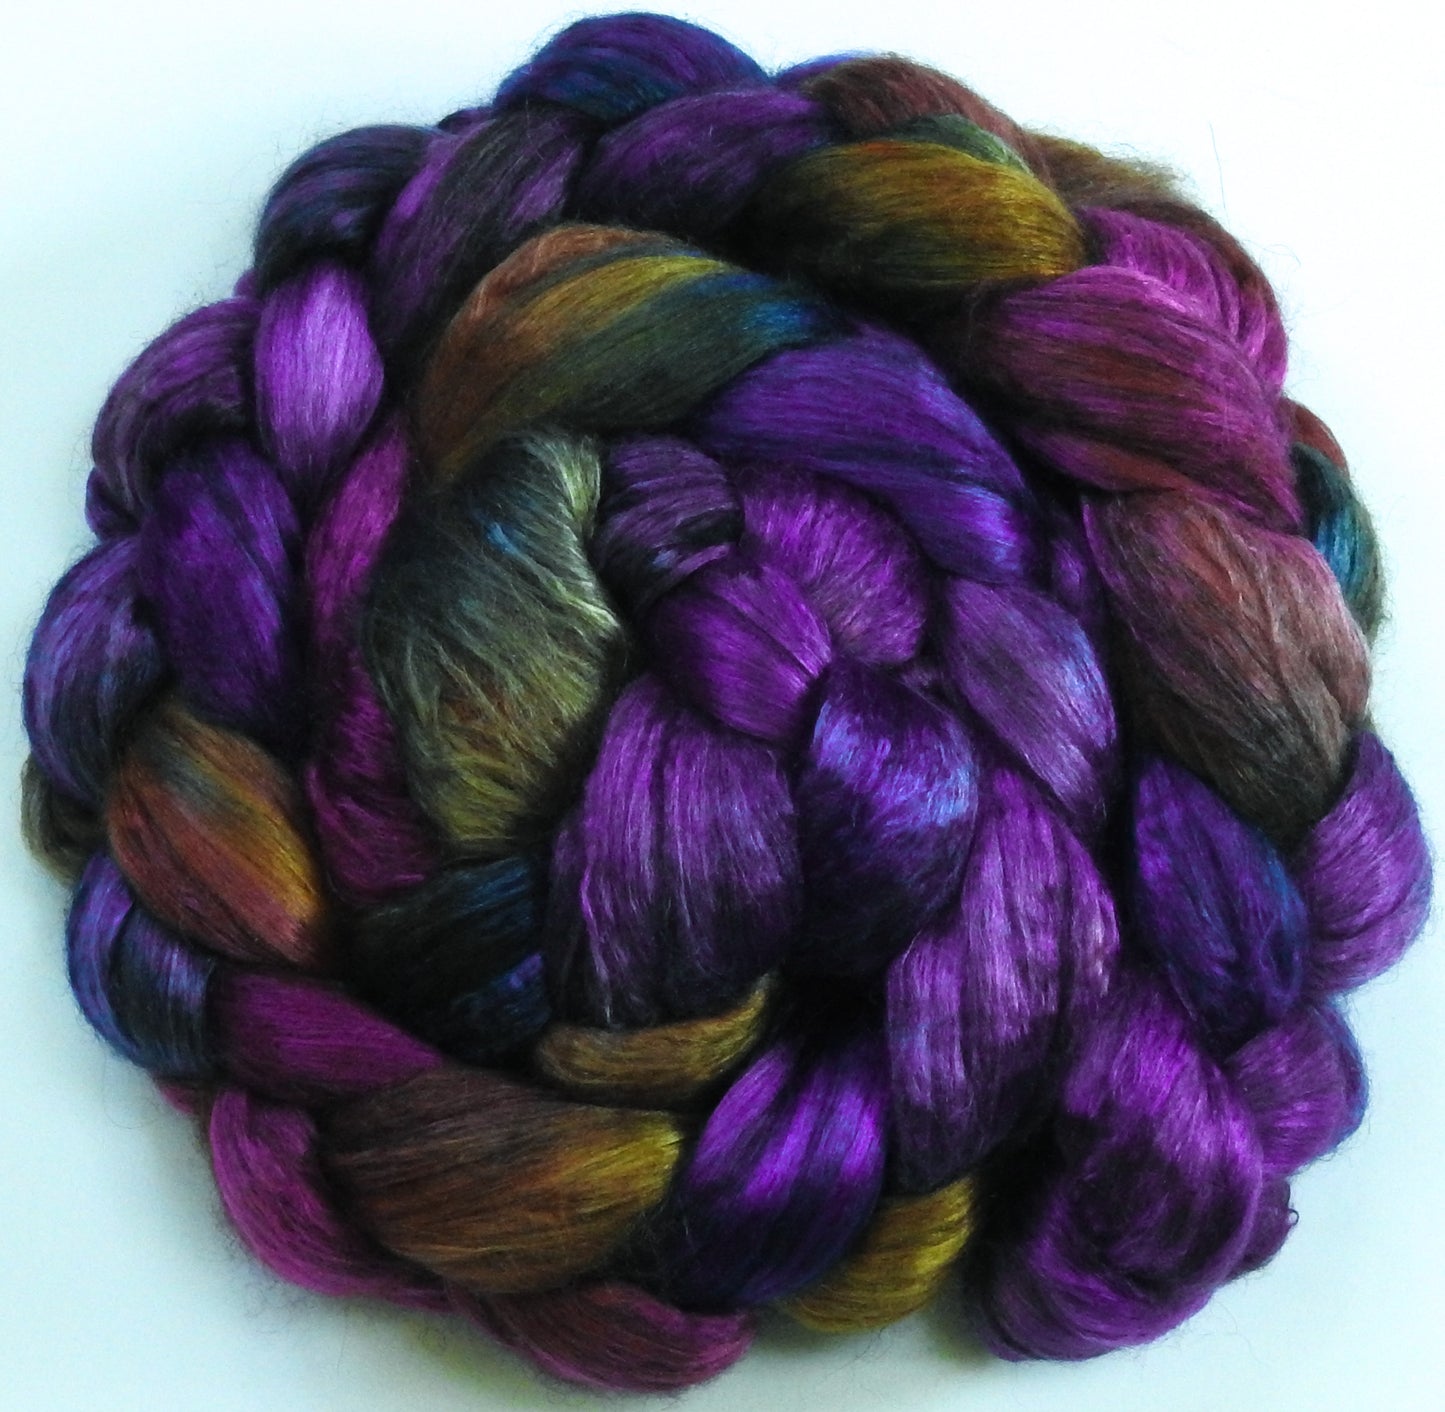 Esther - YAK / mulberry silk ( 50/50)